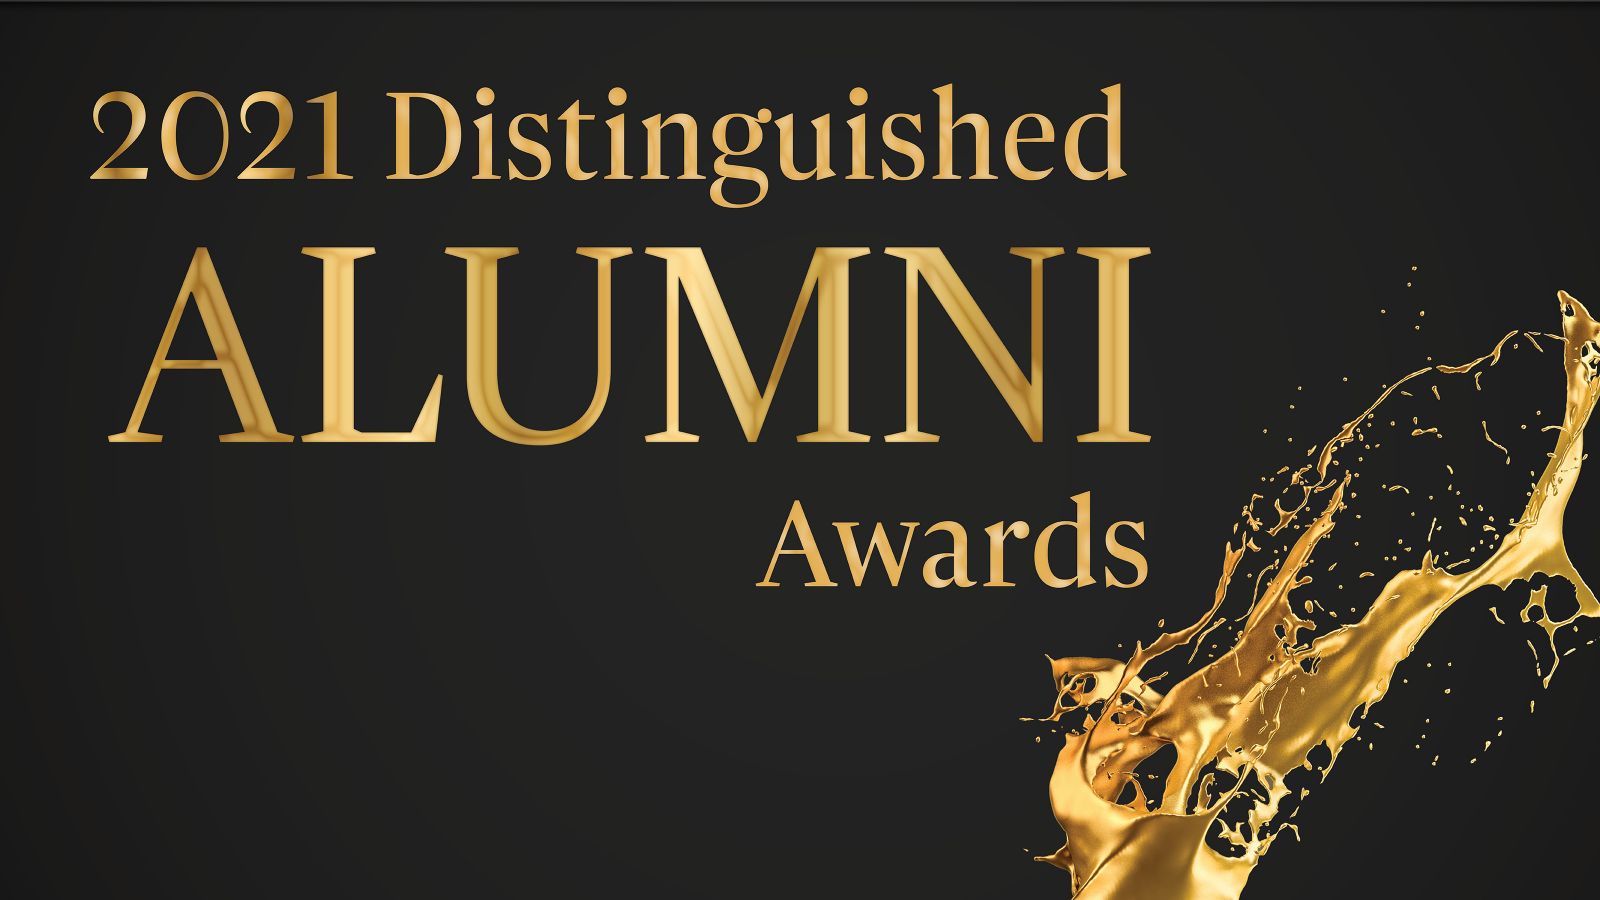 Distinguished alumni awards words against black background